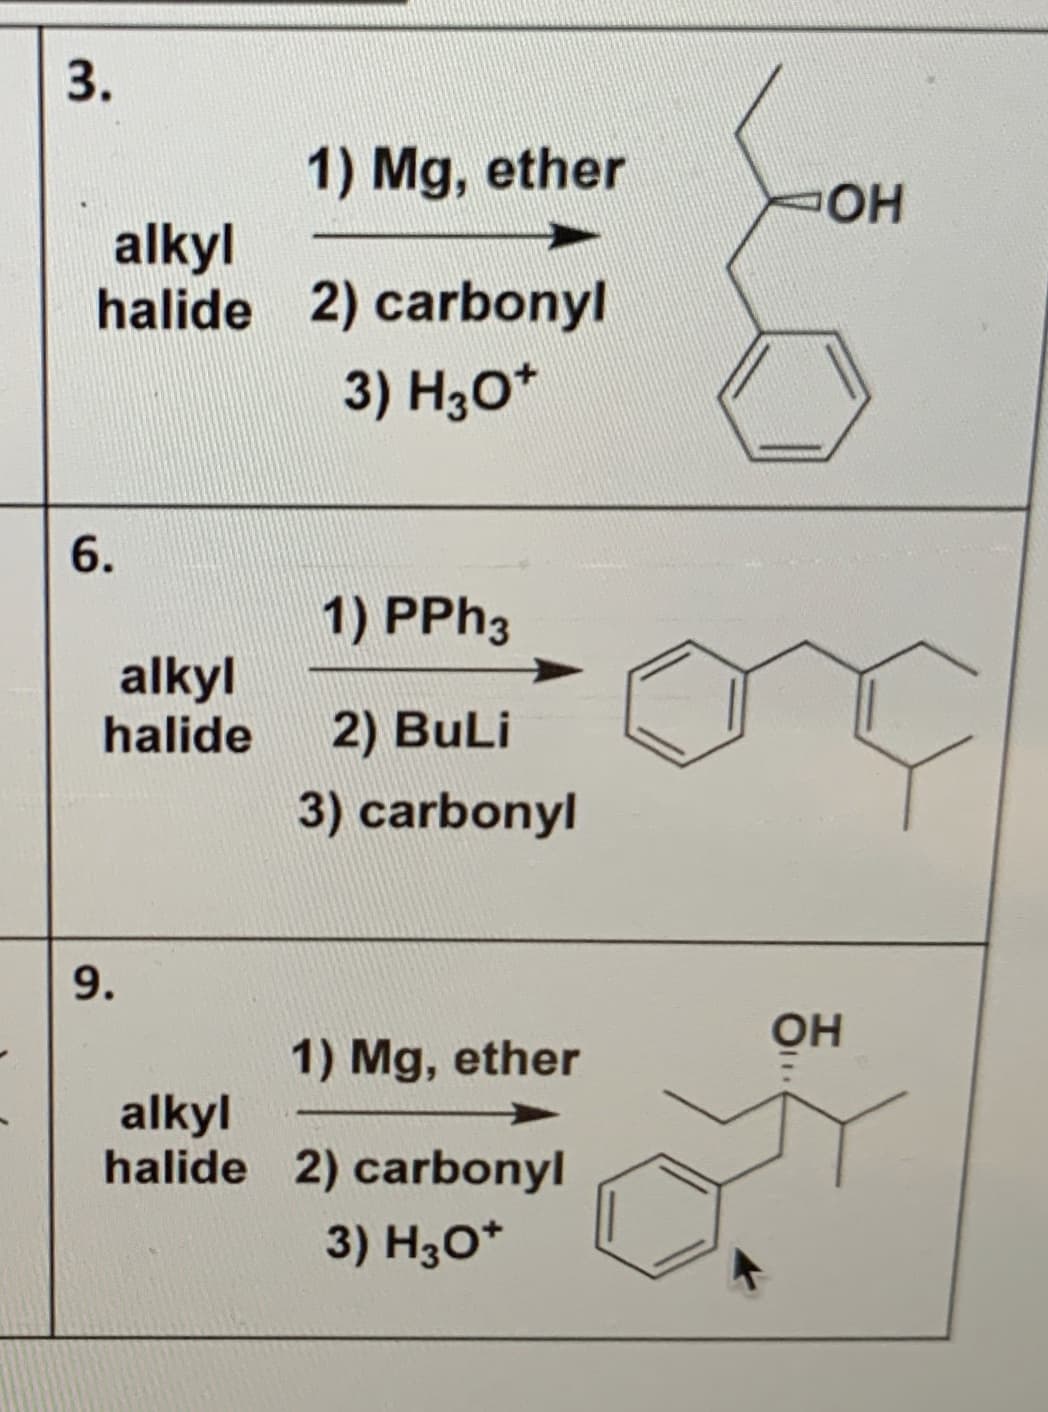 3.
1) Mg, ether
ОН
alkyl
halide 2) carbonyl
3) Hзо*
6.
1) PPH3
alkyl
halide
2) BuLi
3) carbonyl
9.
он
1) Mg, ether
alkyl
halide 2) carbonyl
3) Hзо*
